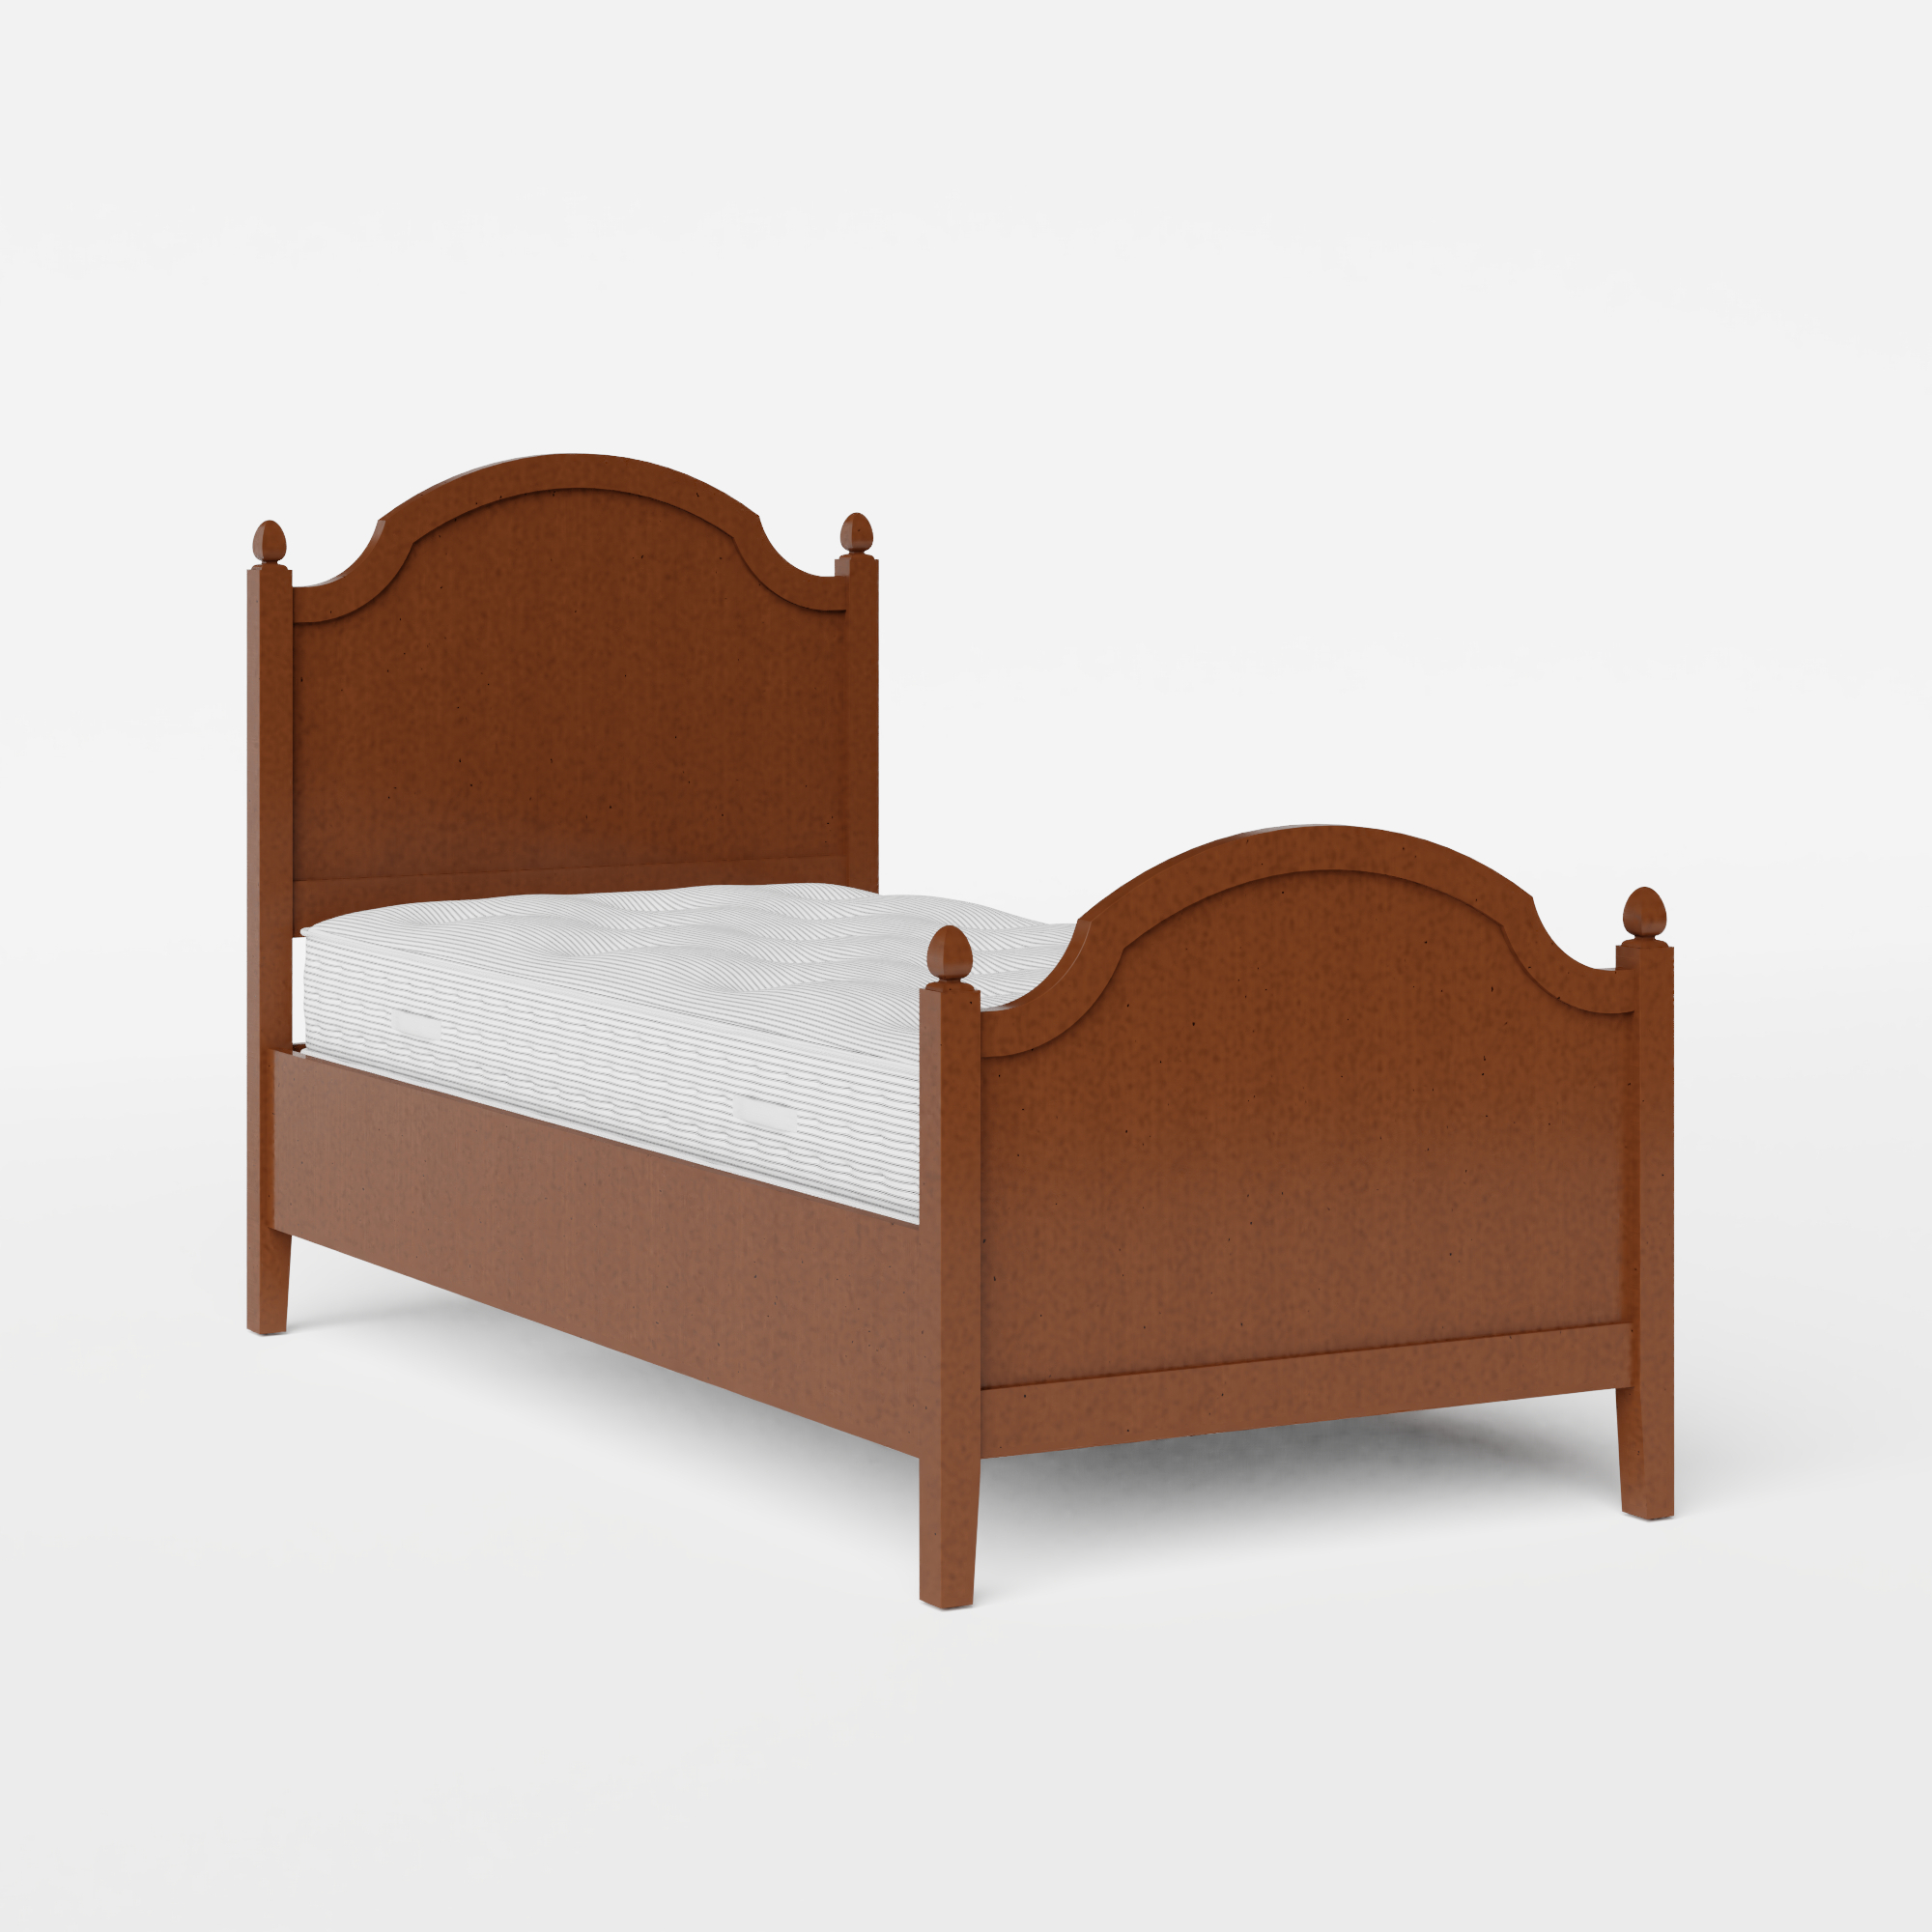 Kipling single wood bed in dark cherry with Juno mattress